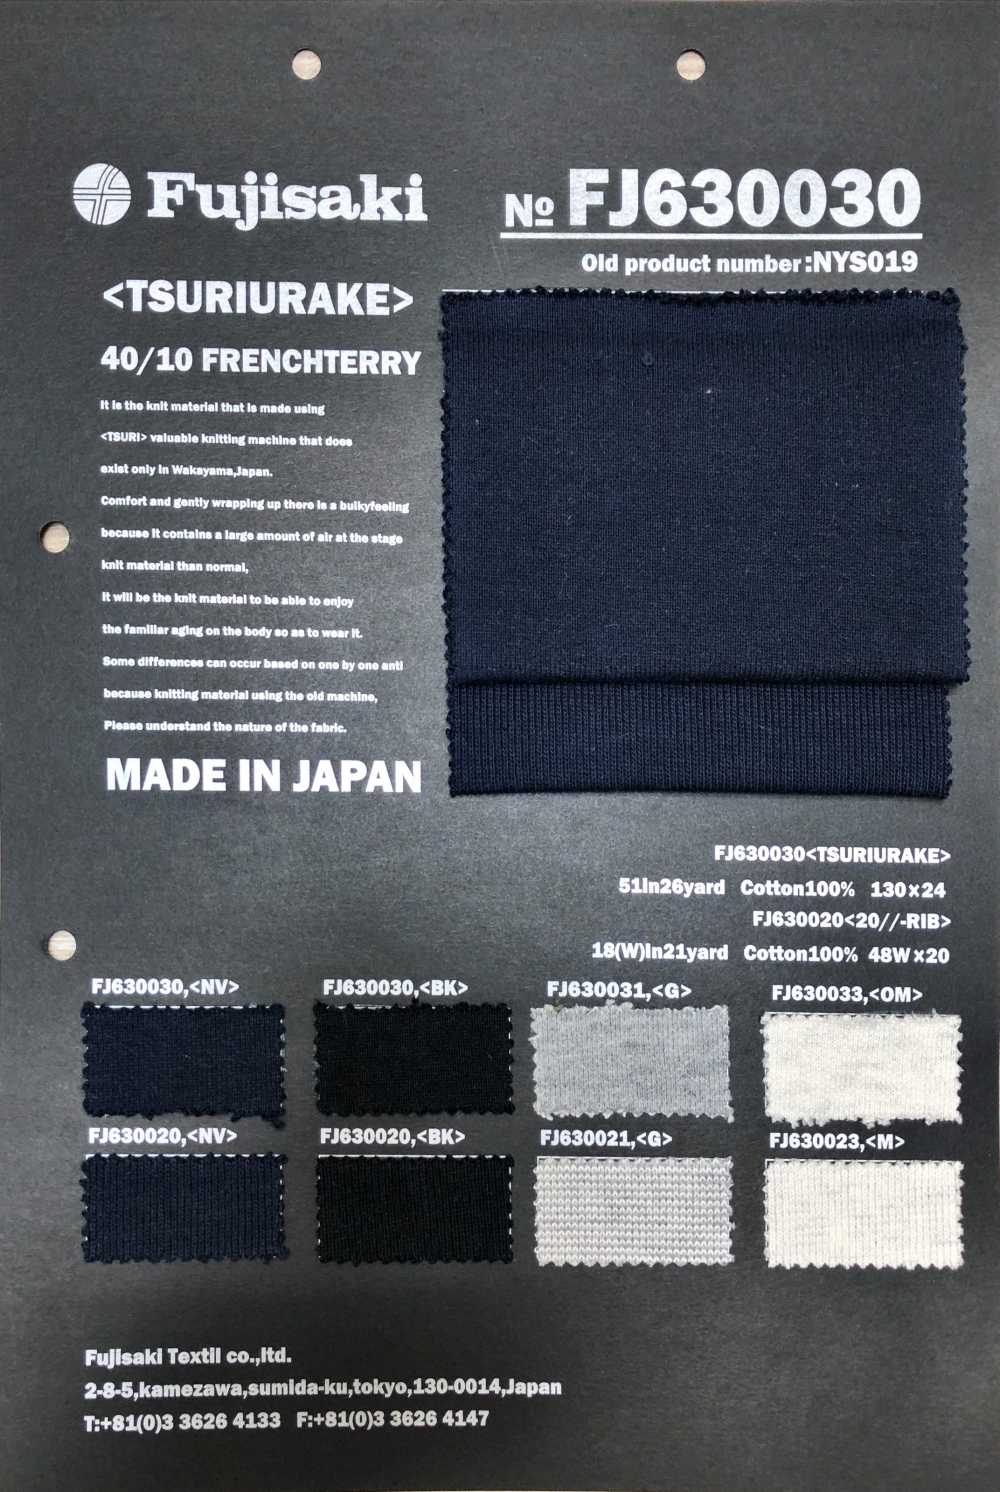 FJ630030 毛圈布和縫製面料 Fujisaki Textile